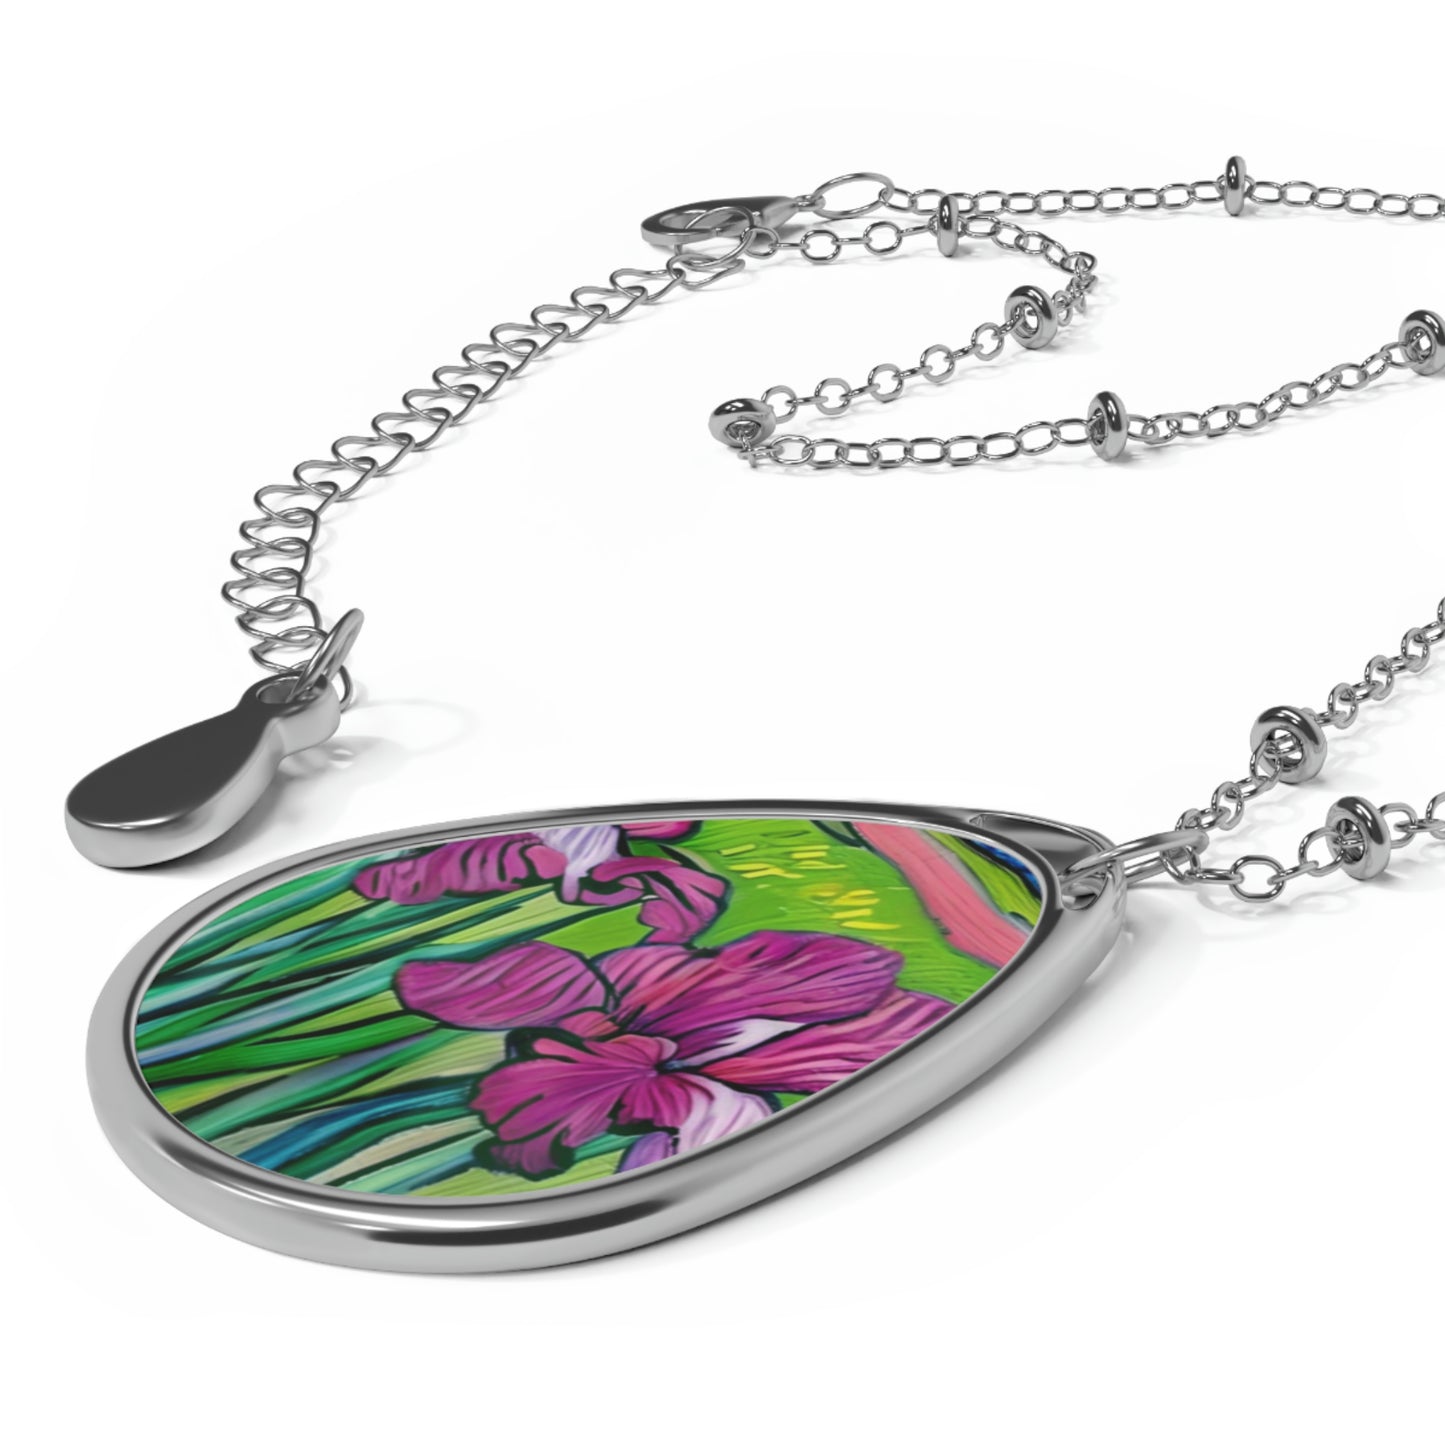 Art of Mari Accessories, Pink Iris Pendant